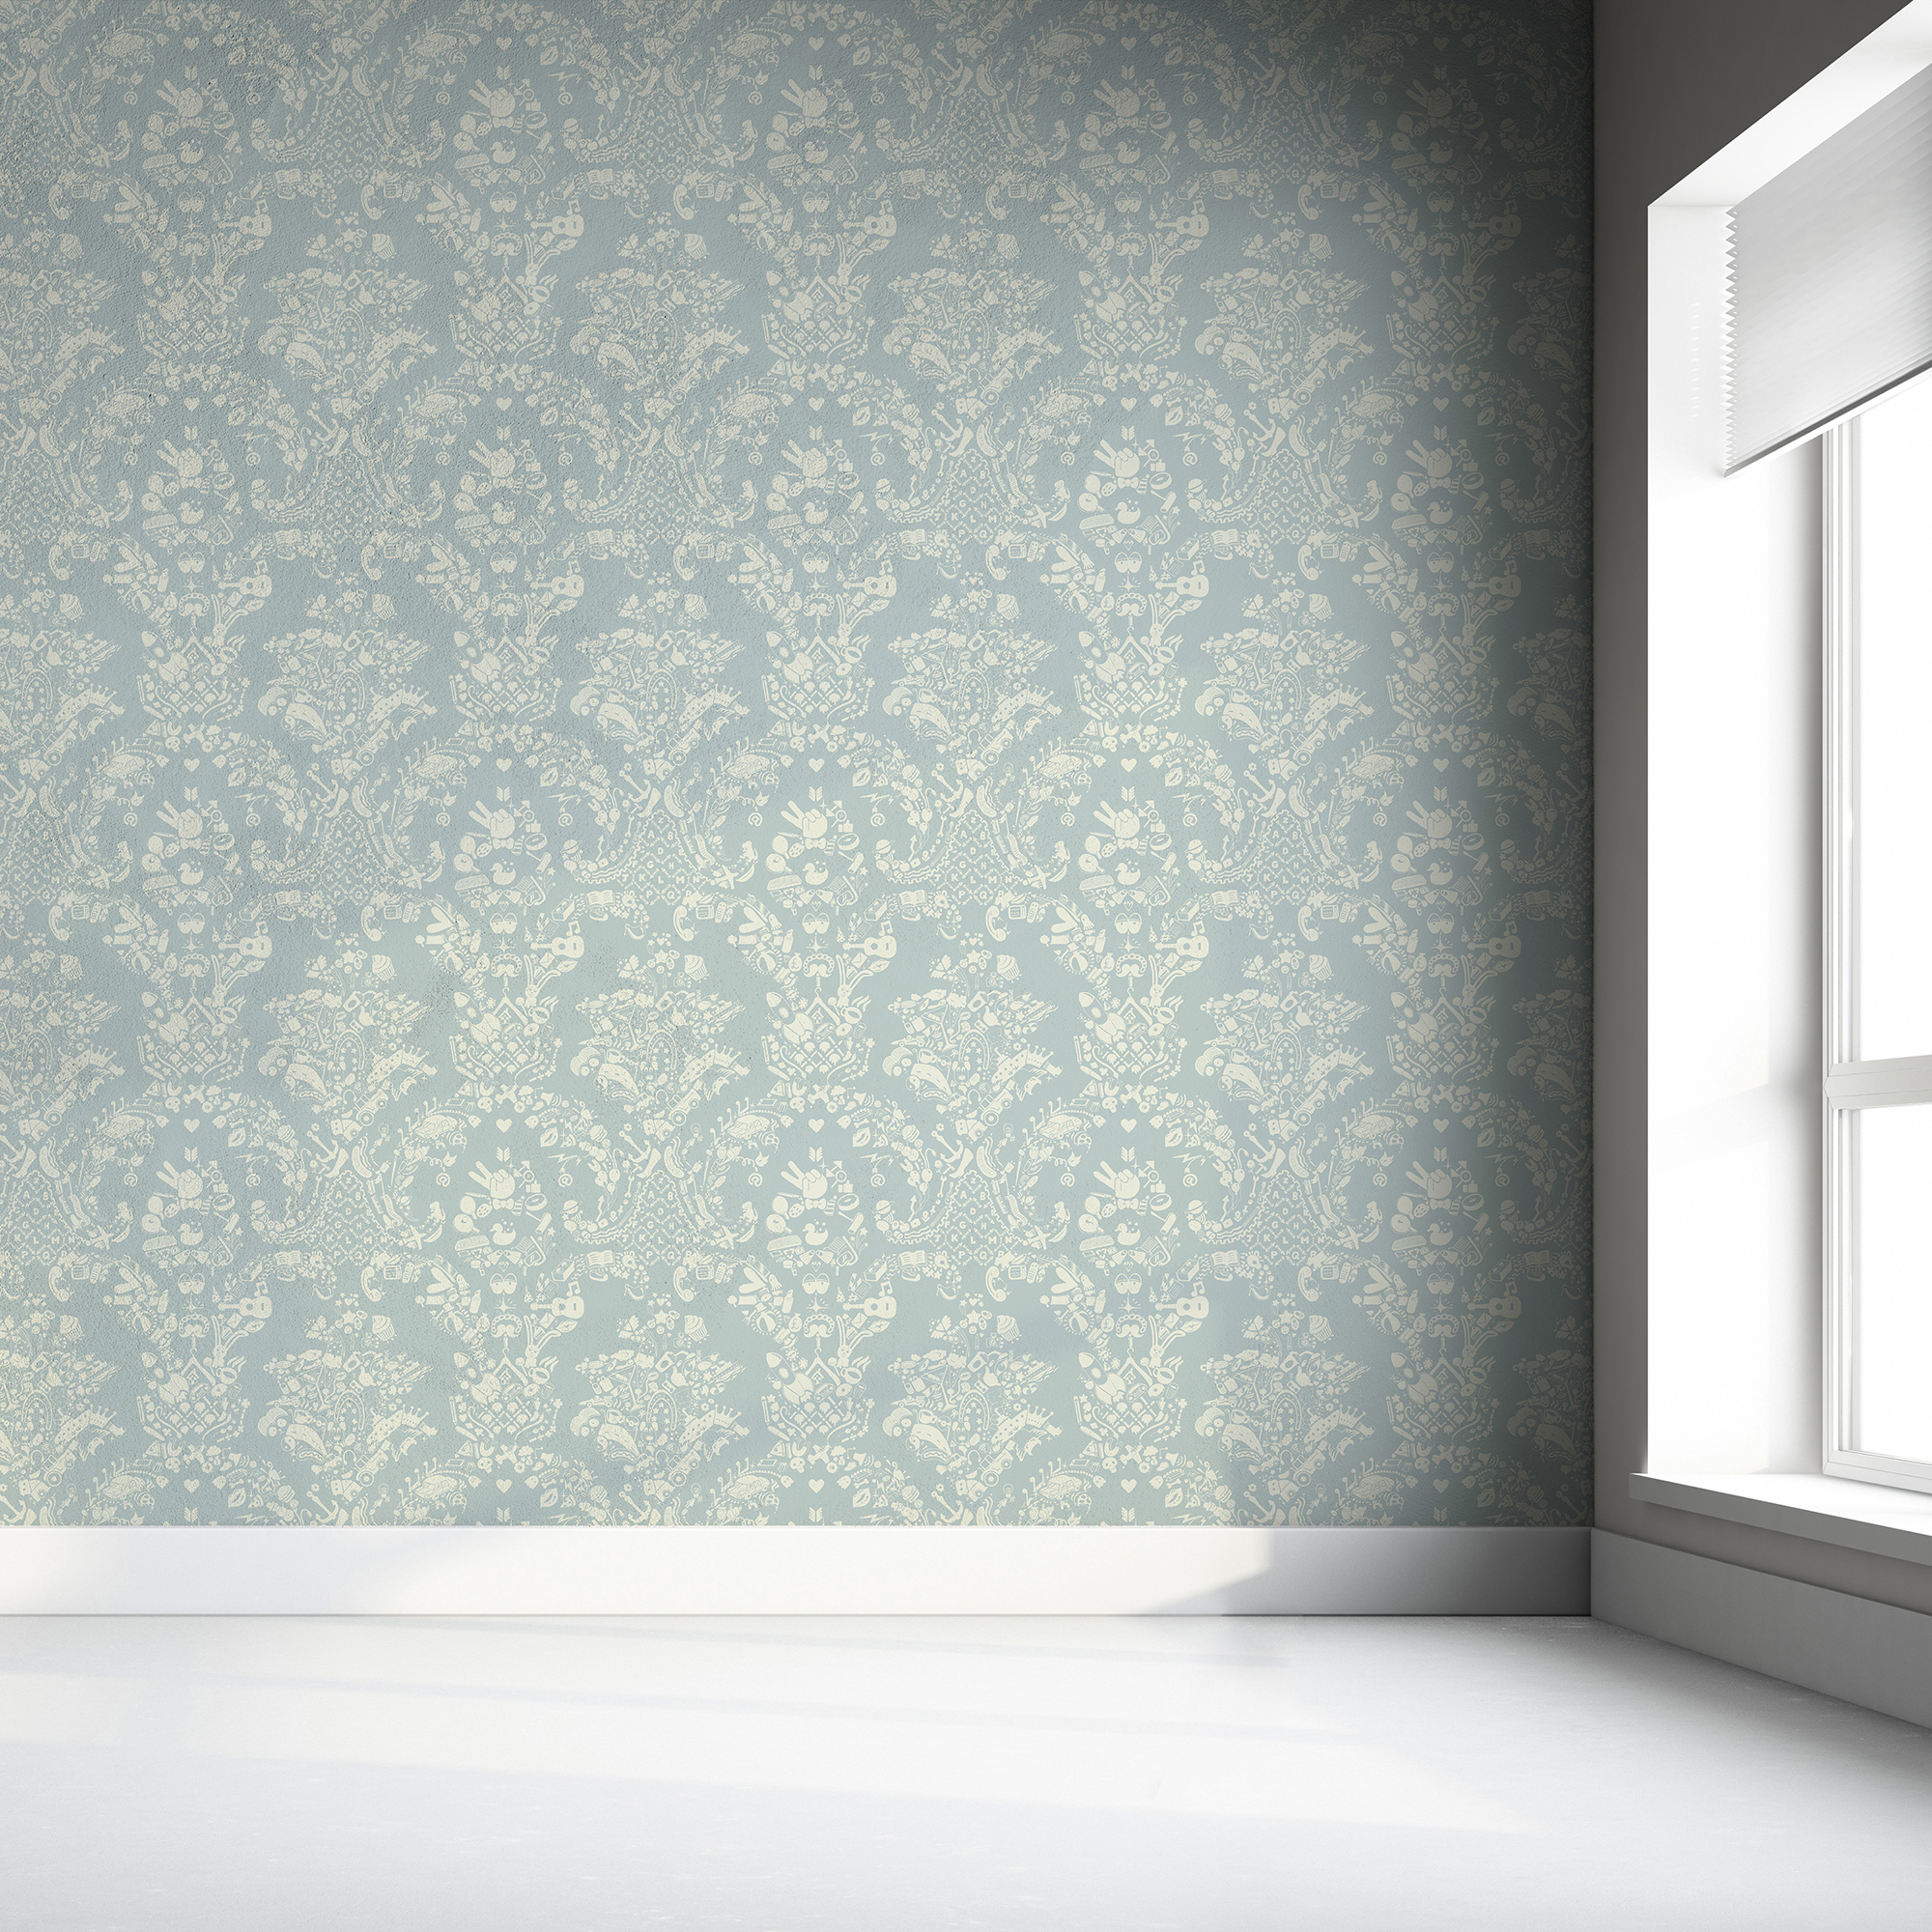 greyblue white damask wallpaper